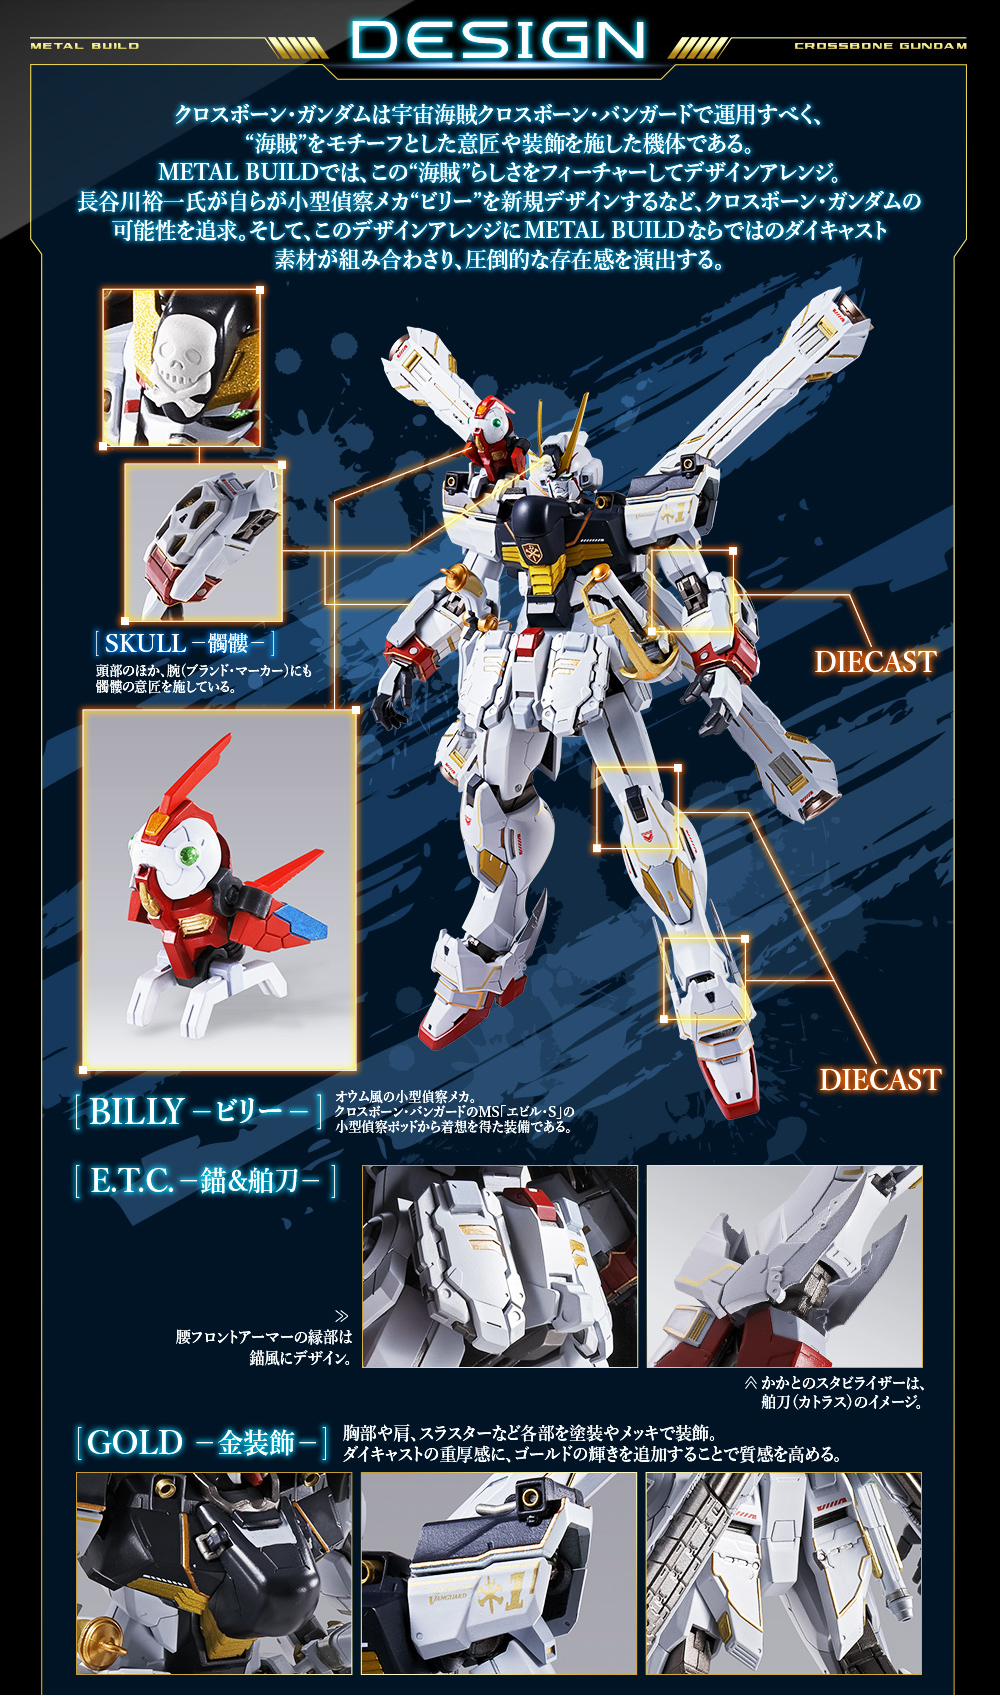 Metal Build XM-X1(F97) Crossbone Gundam X-1